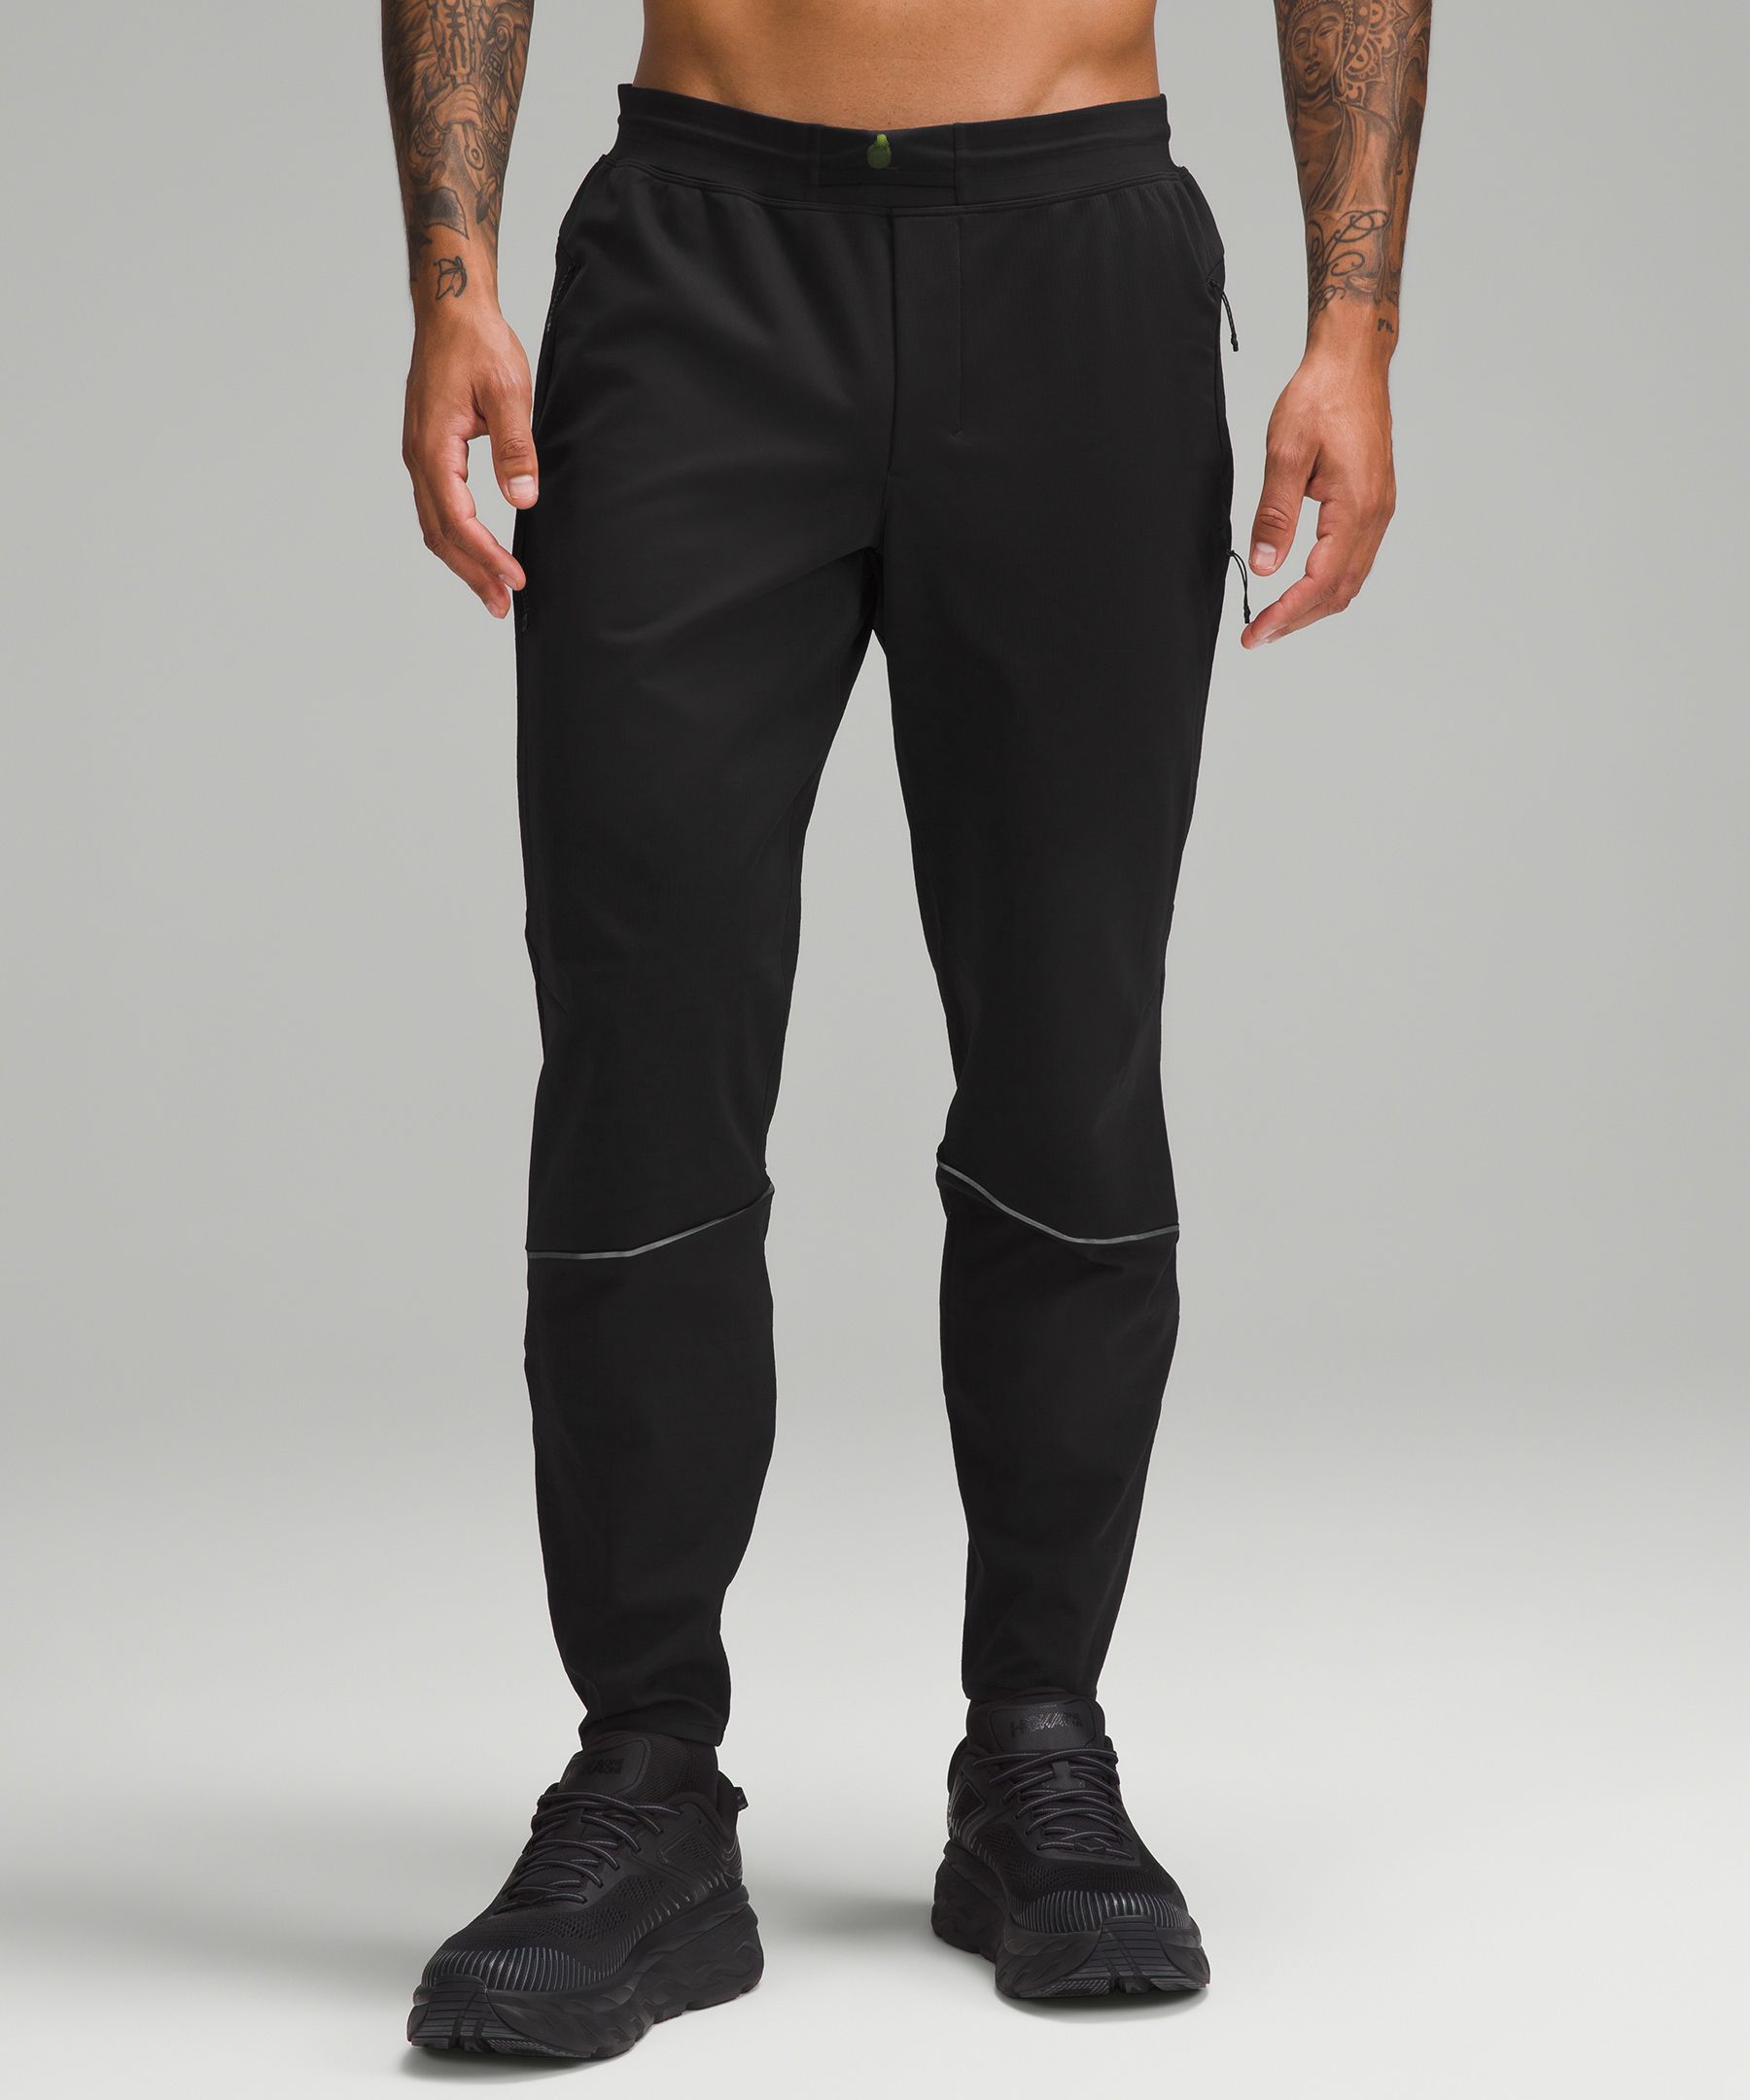 Nike Dri-FIT Fast Men's Running Pants - Black